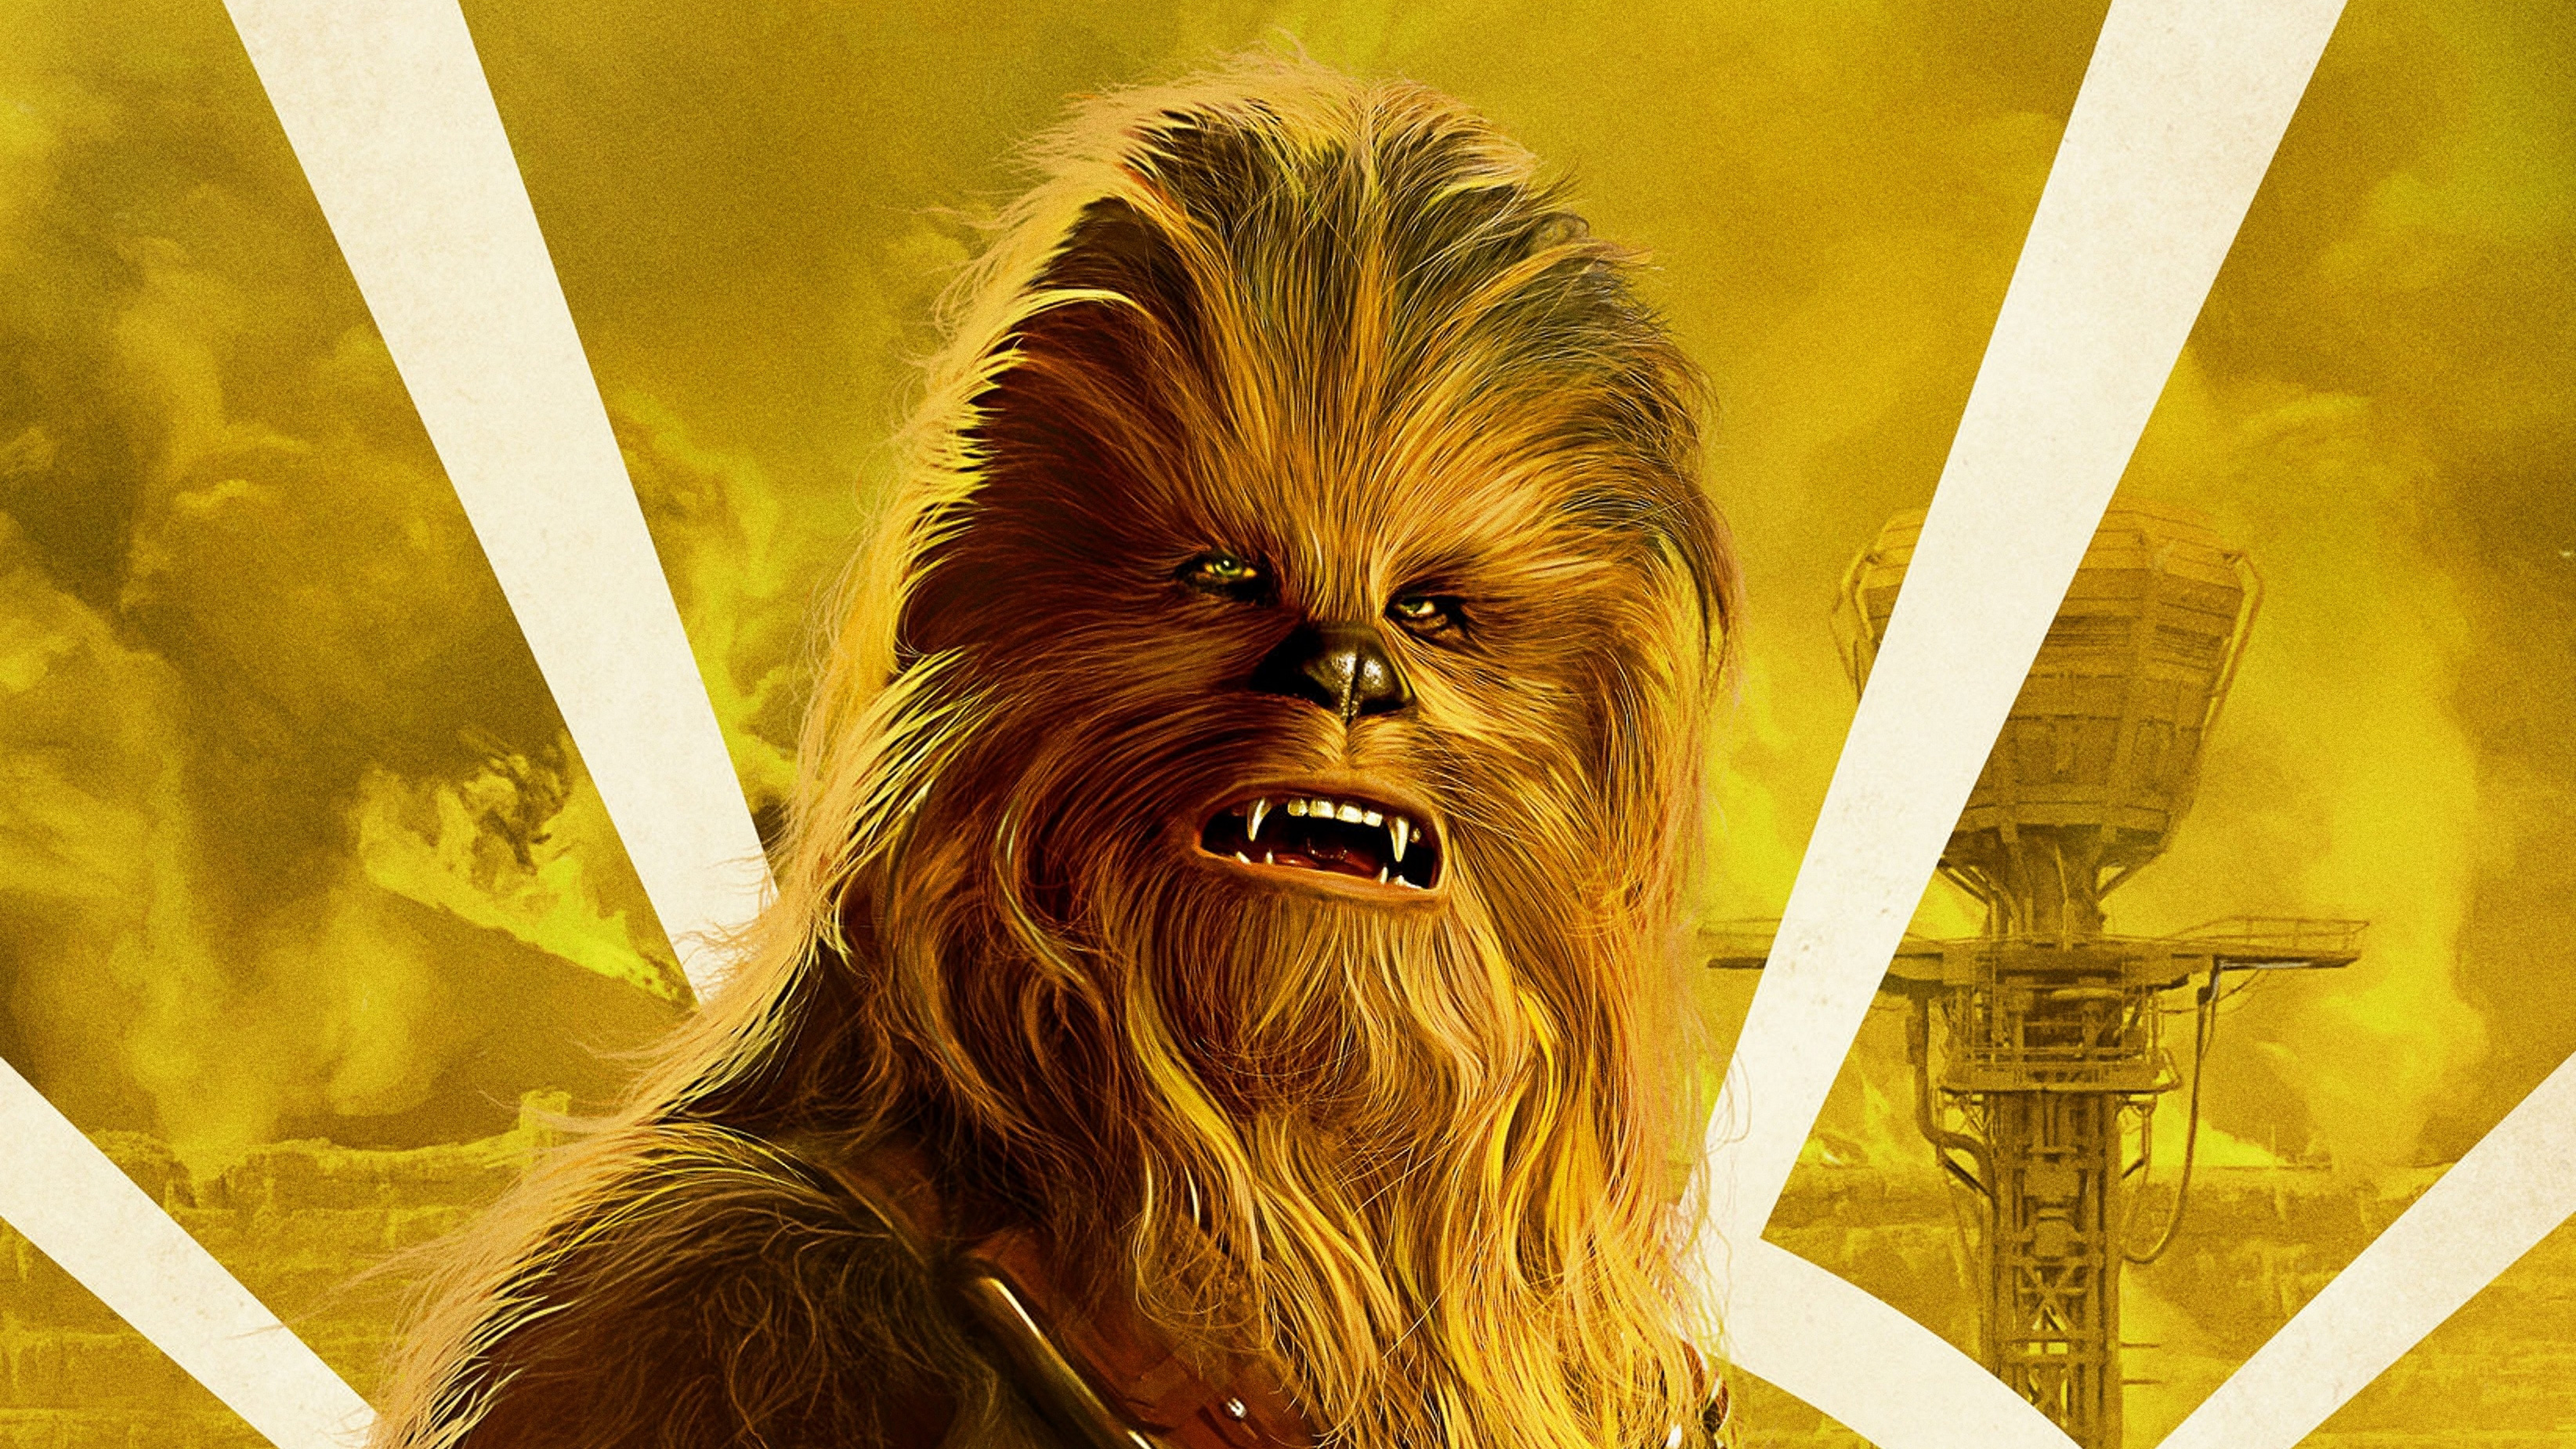 Chewbacca Solo A Star Wars Story Star Wars 3288x1849